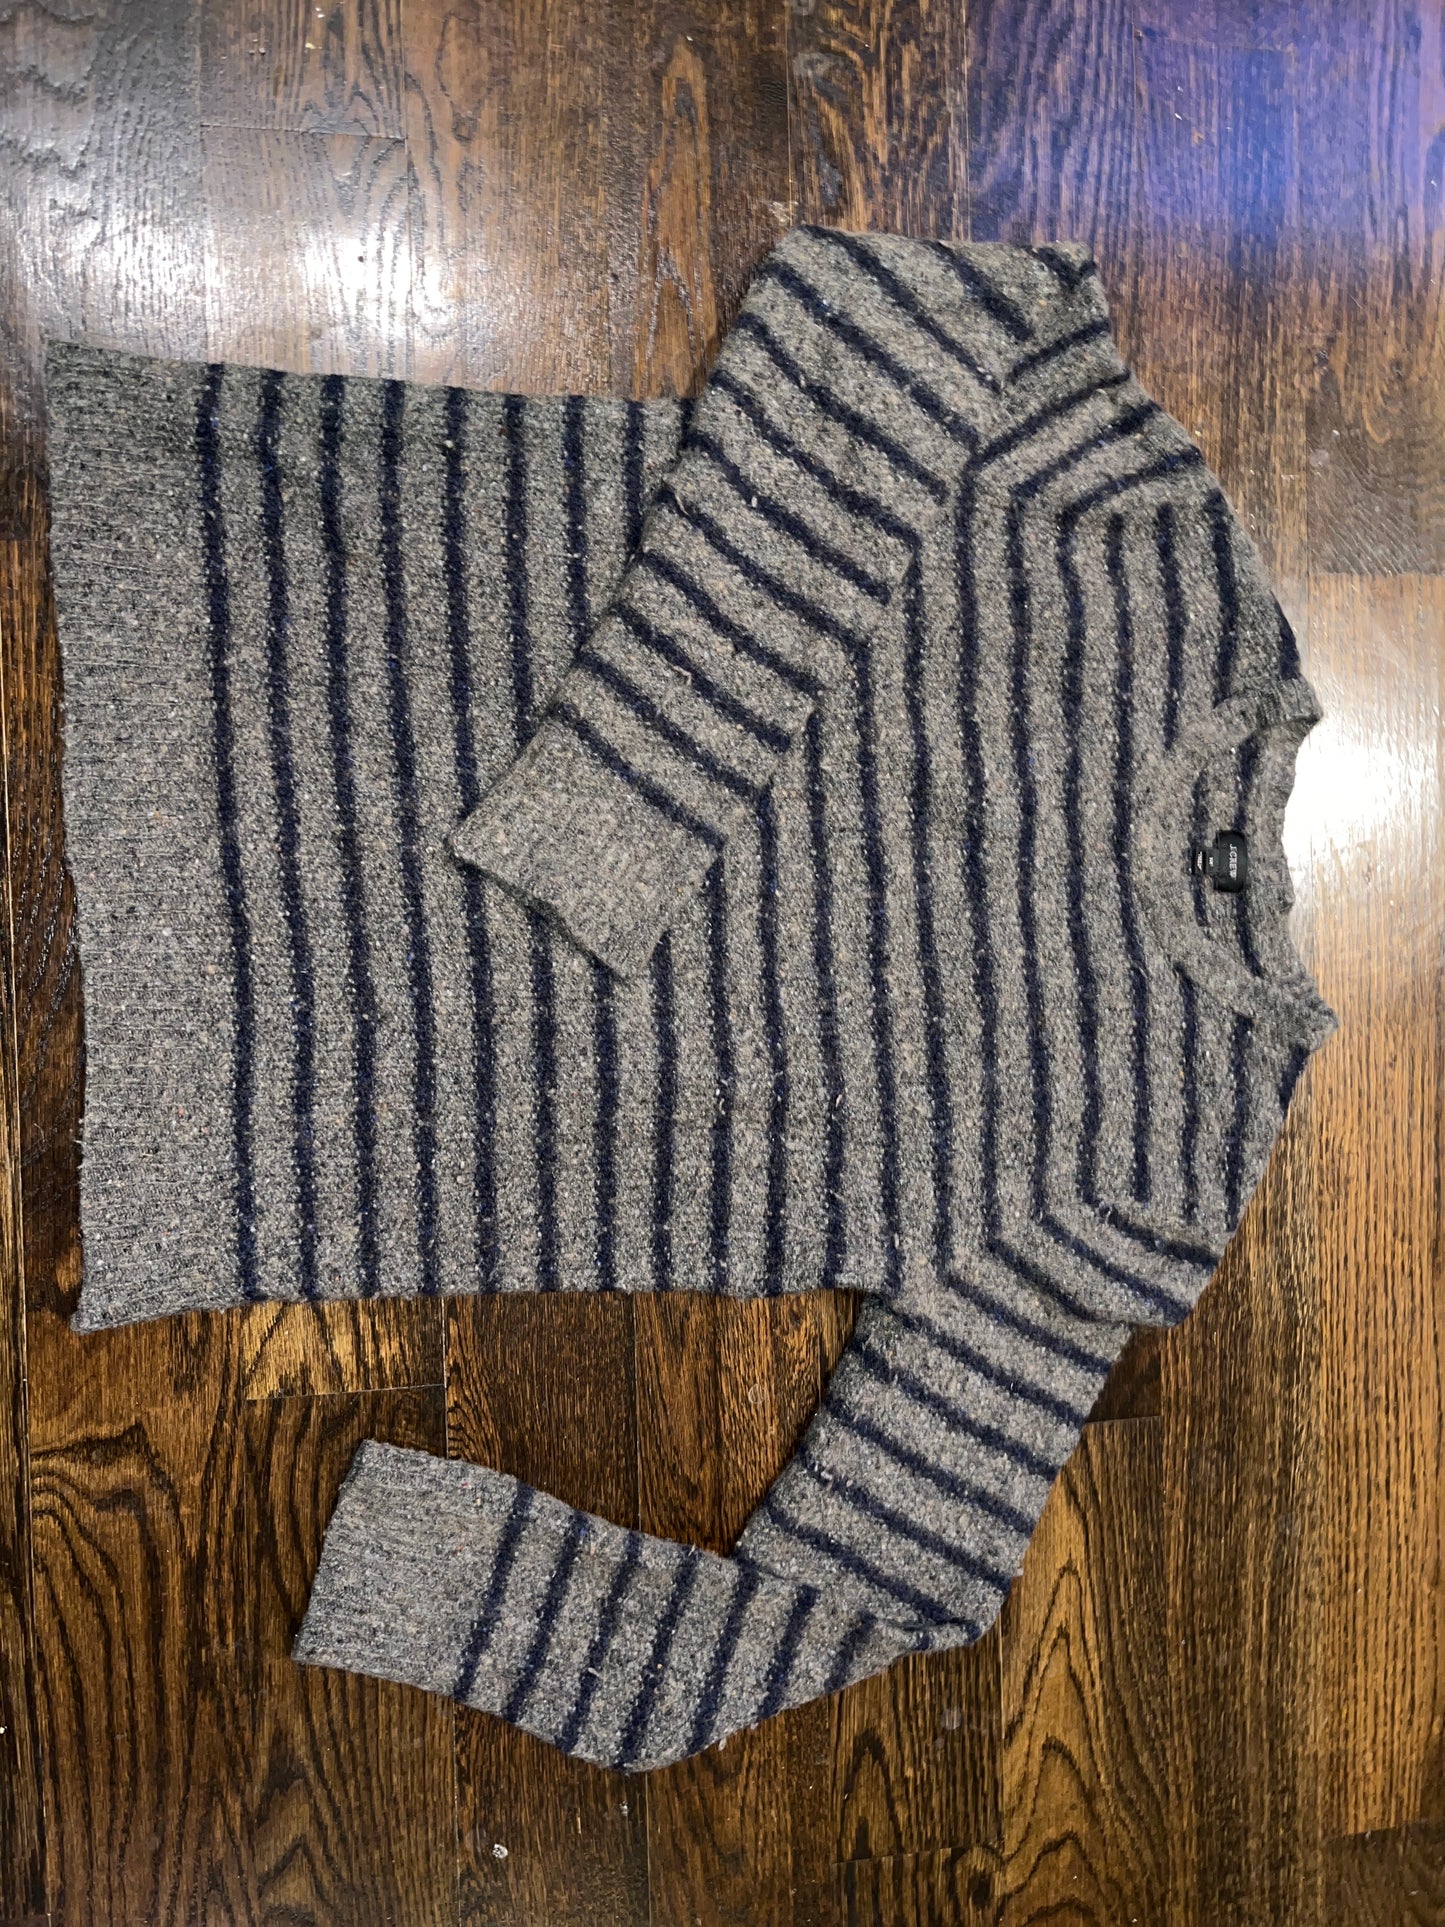 J Crew Wool Sweater (Men’s Medium)